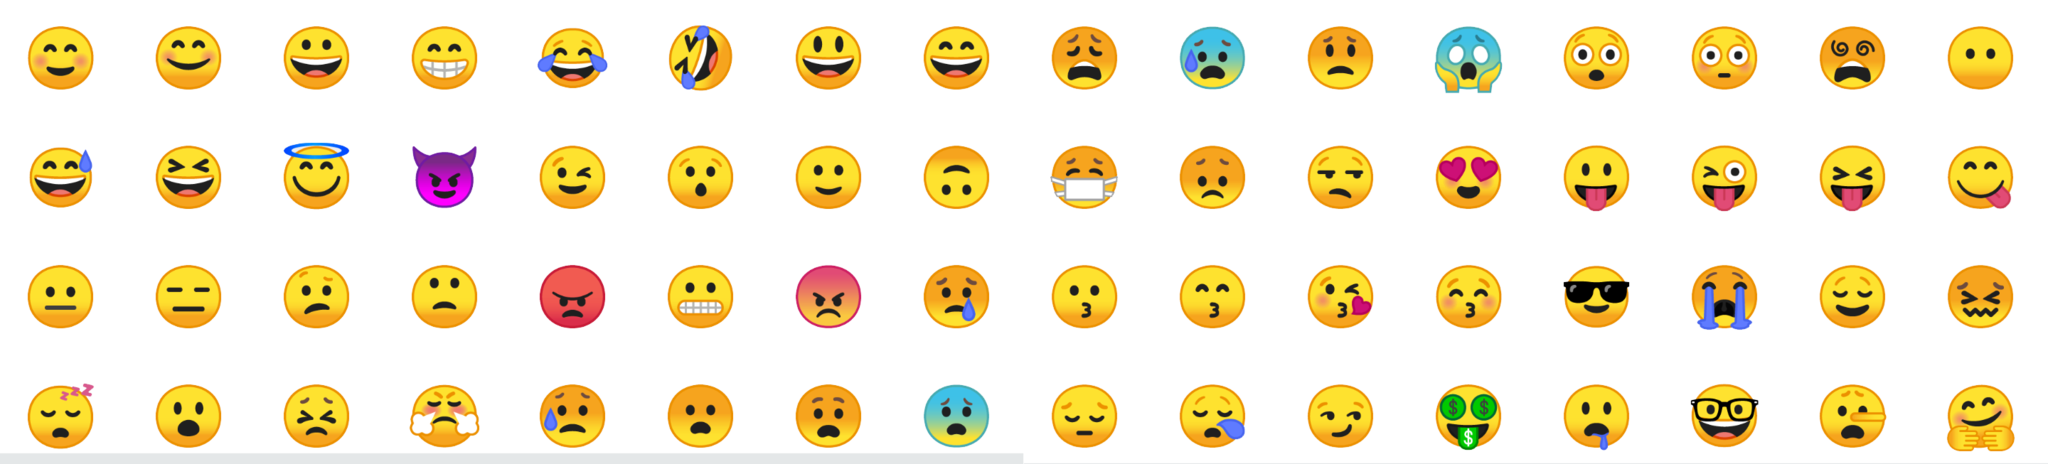 Android O emoji